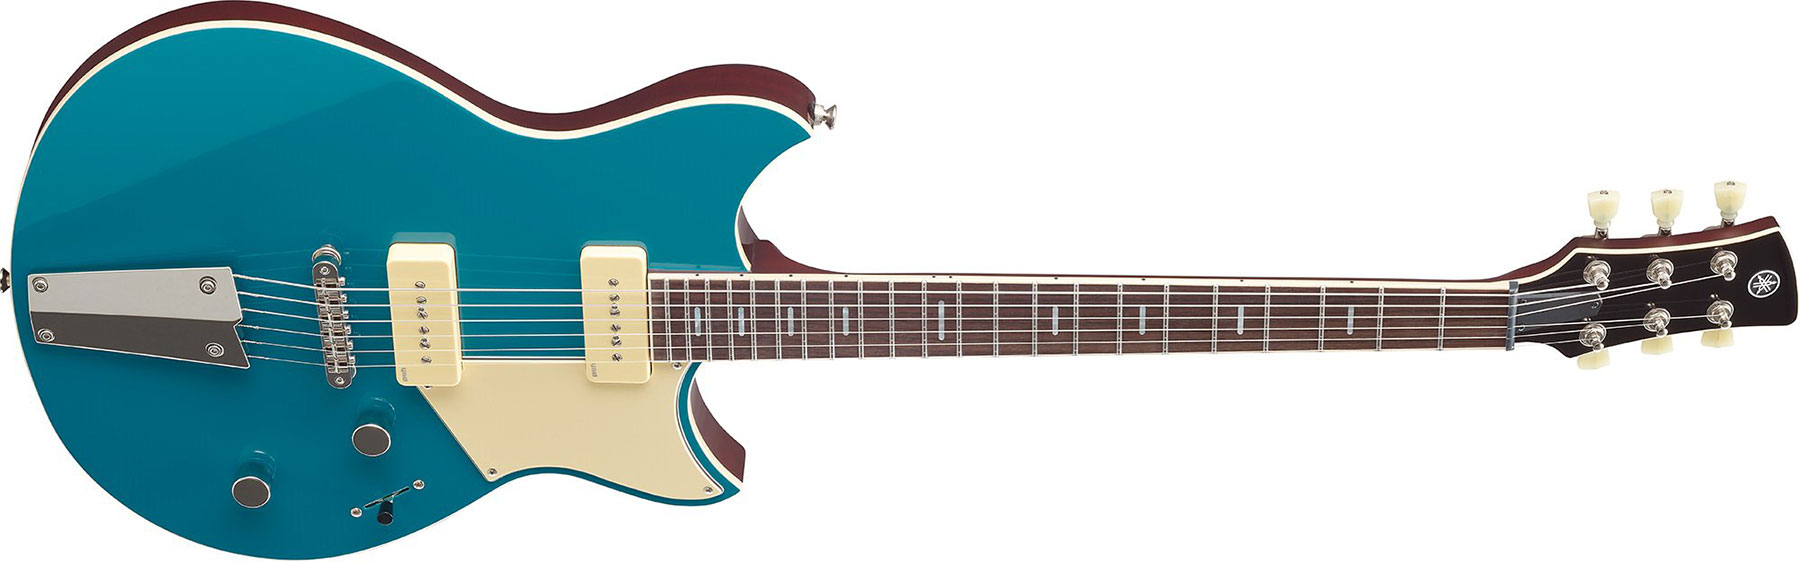 Yamaha Rss02t Revstar Standard 2p90 Ht Rw - Swift Blue - Guitarra eléctrica de doble corte - Variation 1